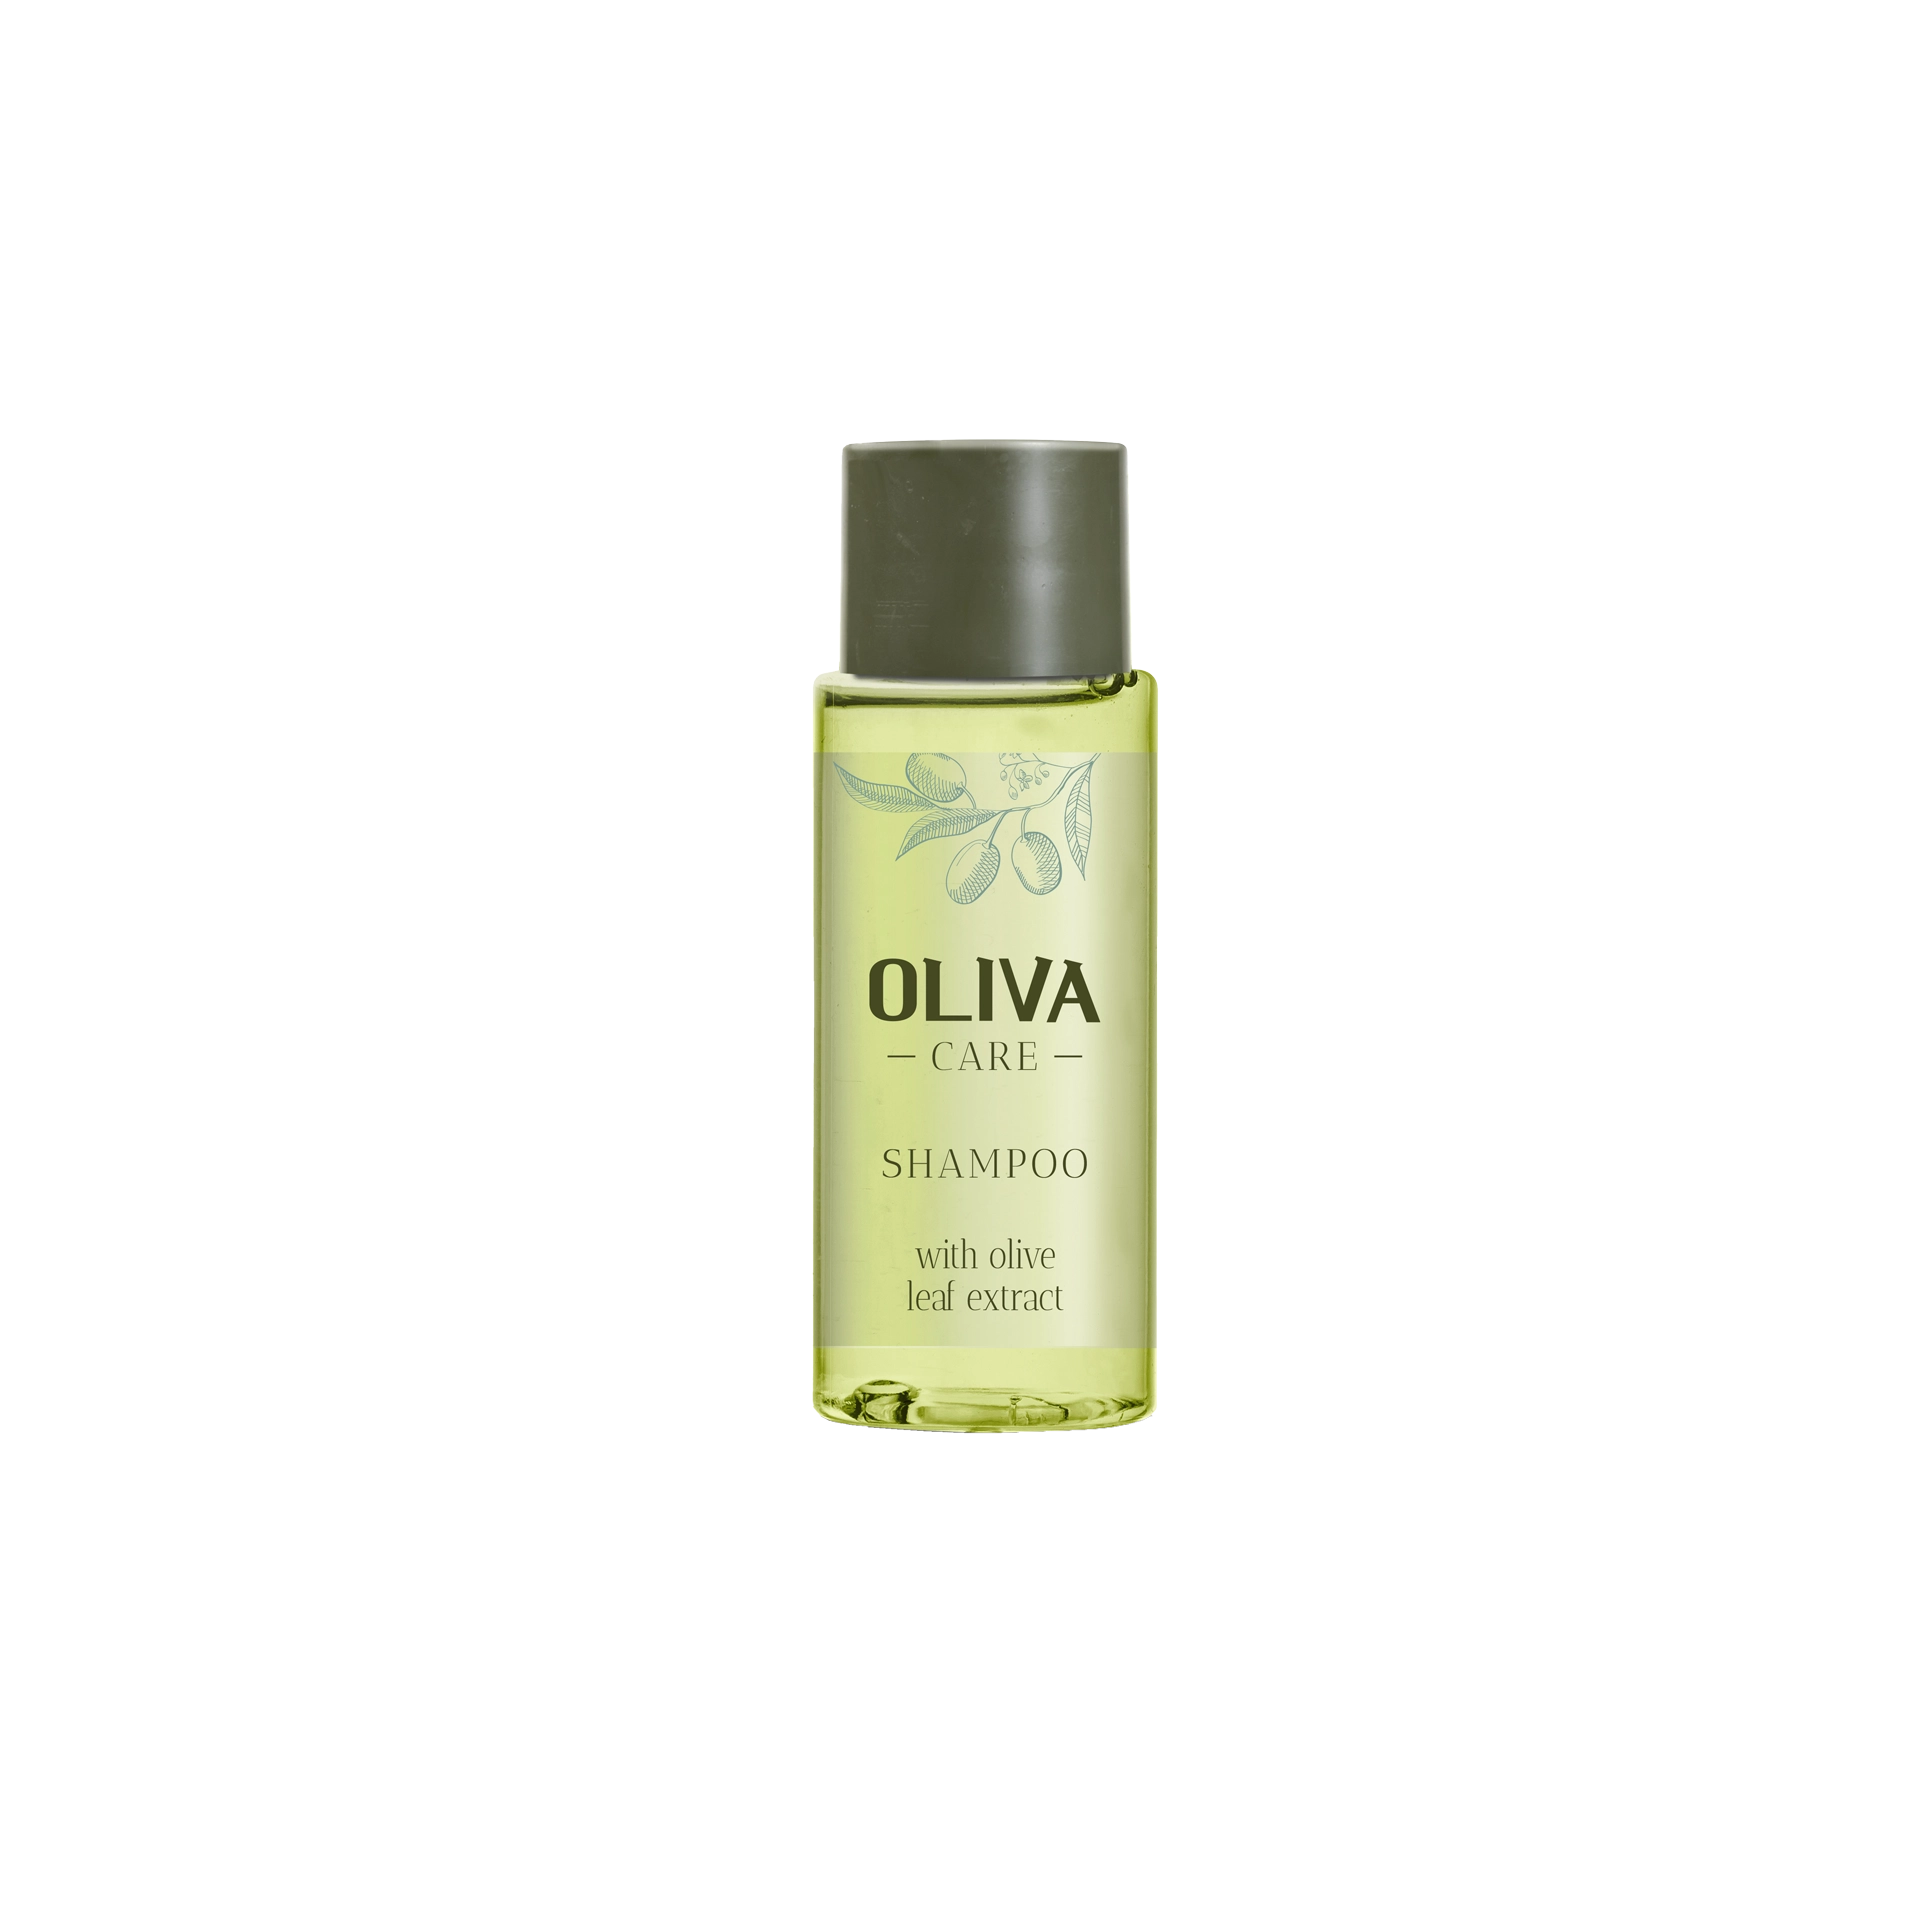 Shampoo | Oliva Care mit Olivenblattextrakt Flacon | 30 ml